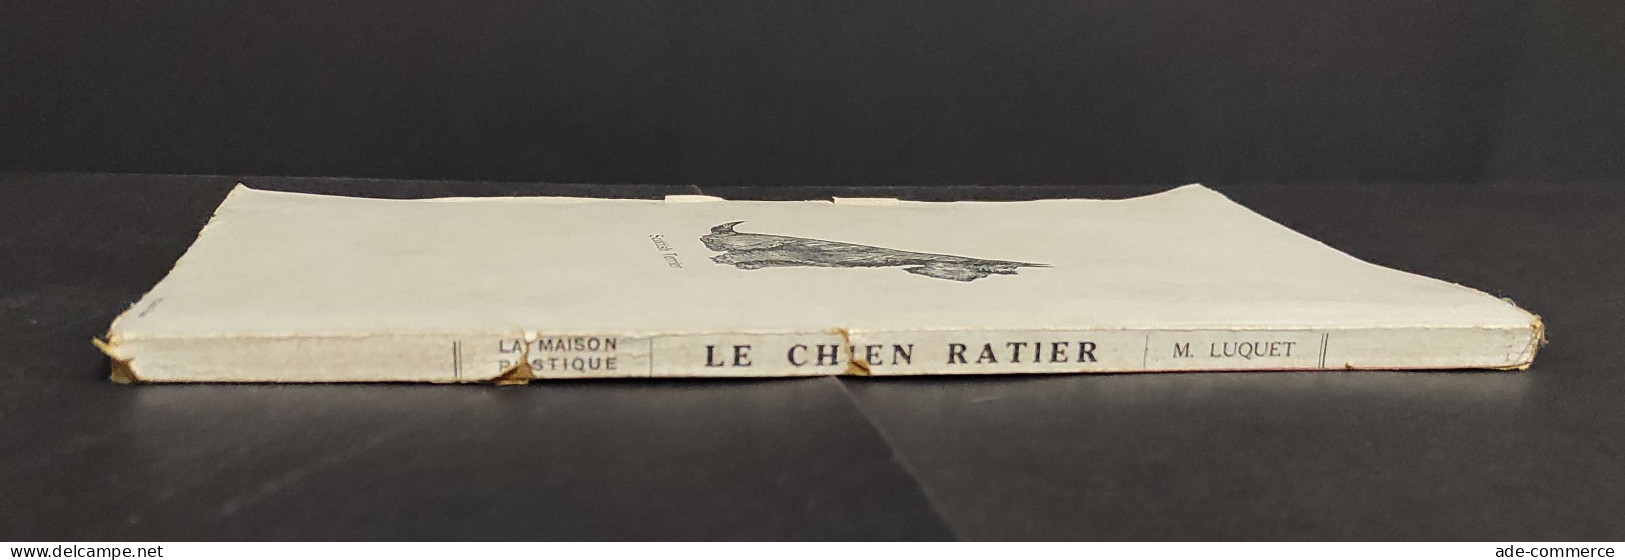 Le Chien Retier - M. Loquet                                                                                              - Gezelschapsdieren